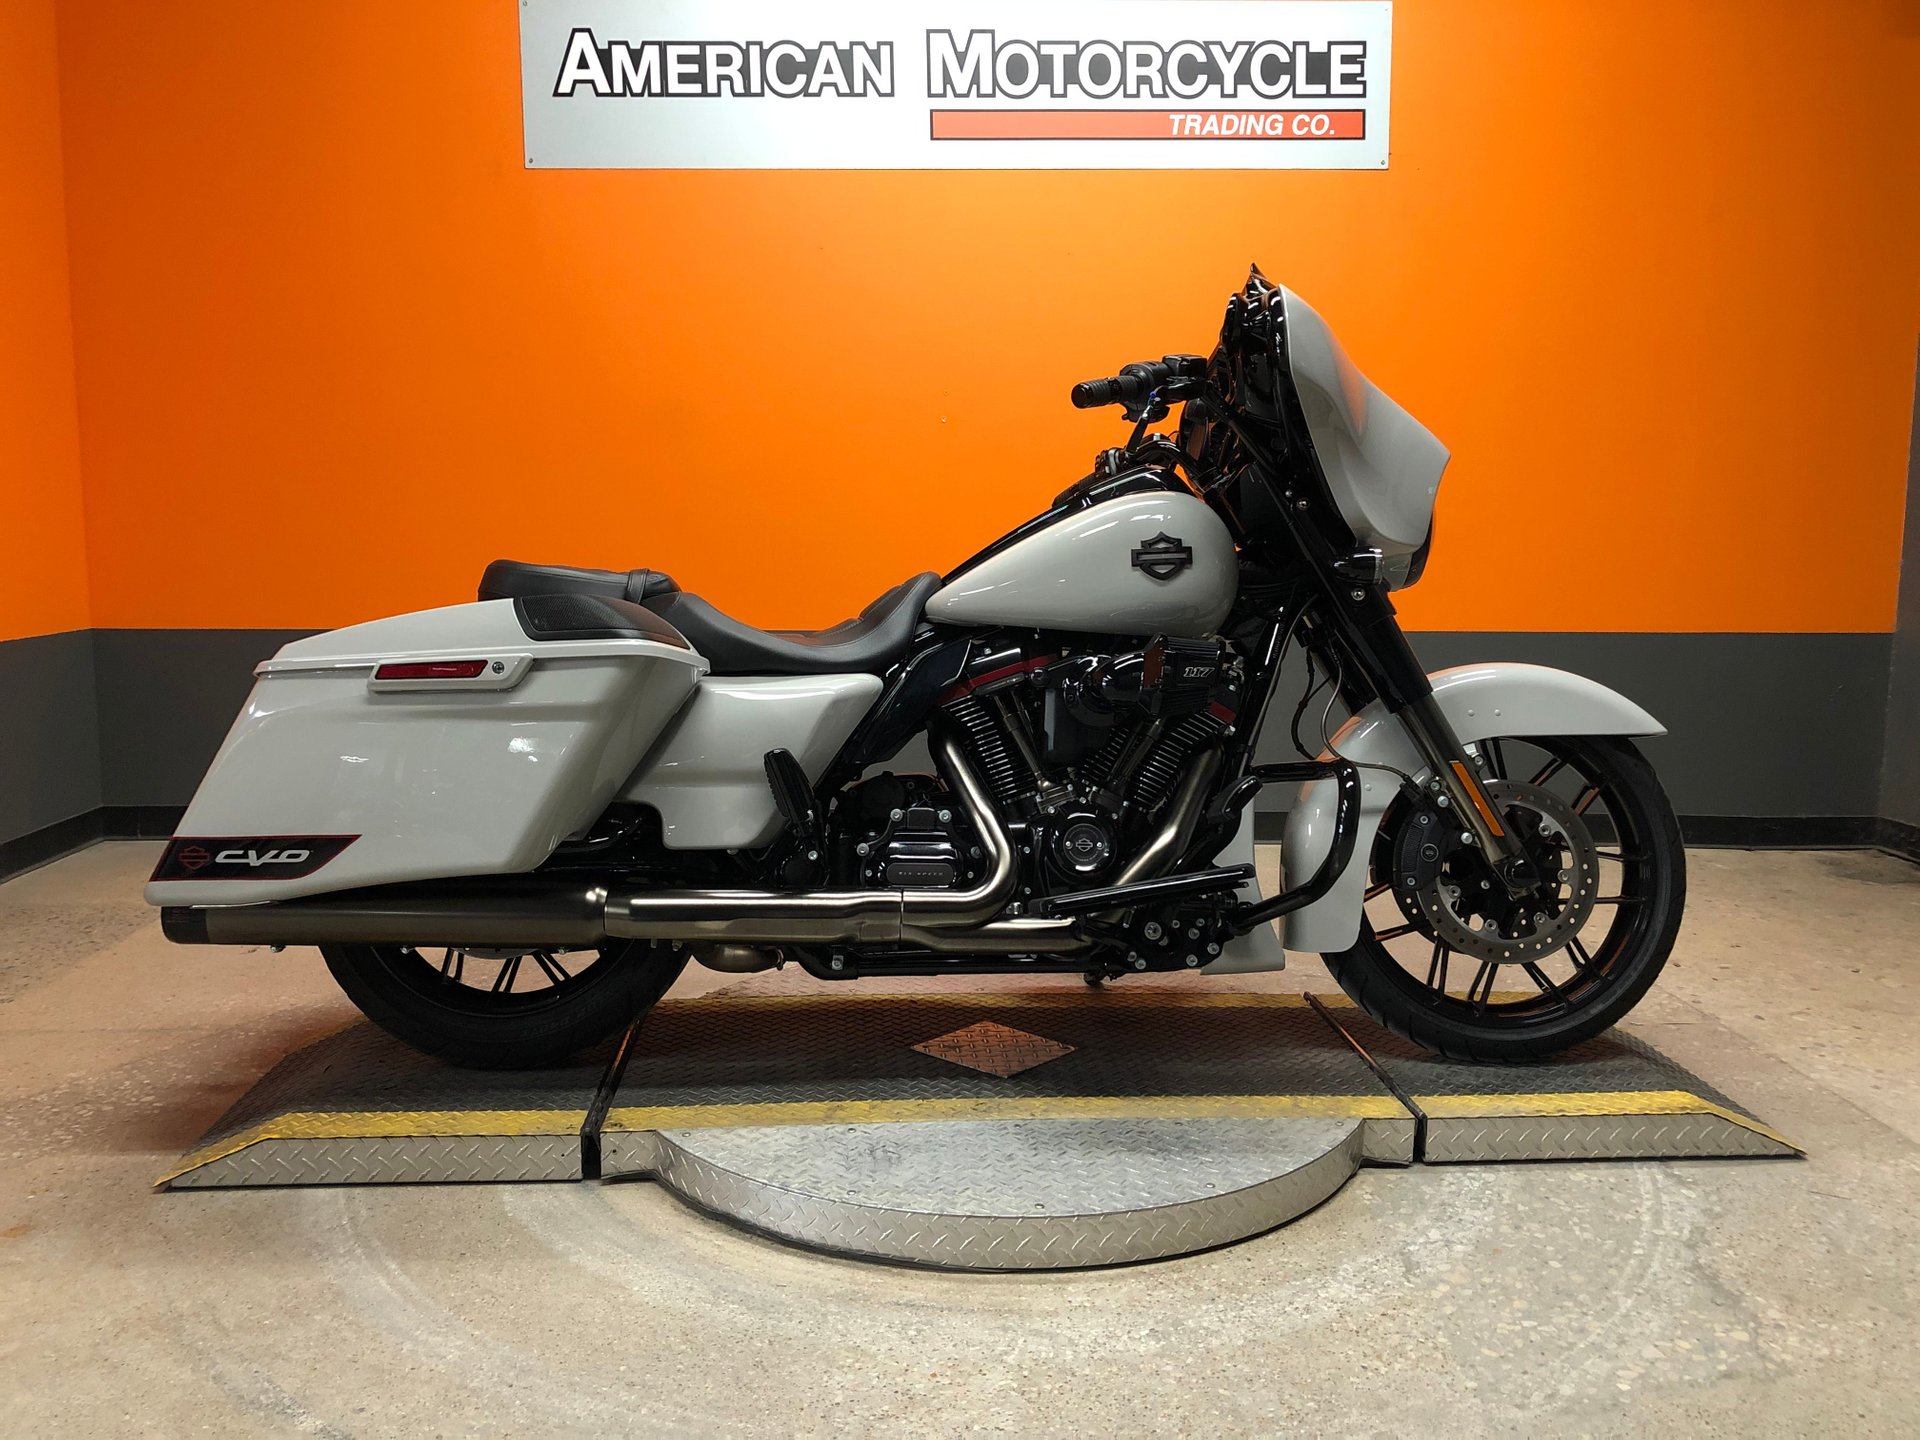 2020 Harley Davidson Cvo Street Glide American Motorcycle Trading Company Used Harley Davidson Motorcycles